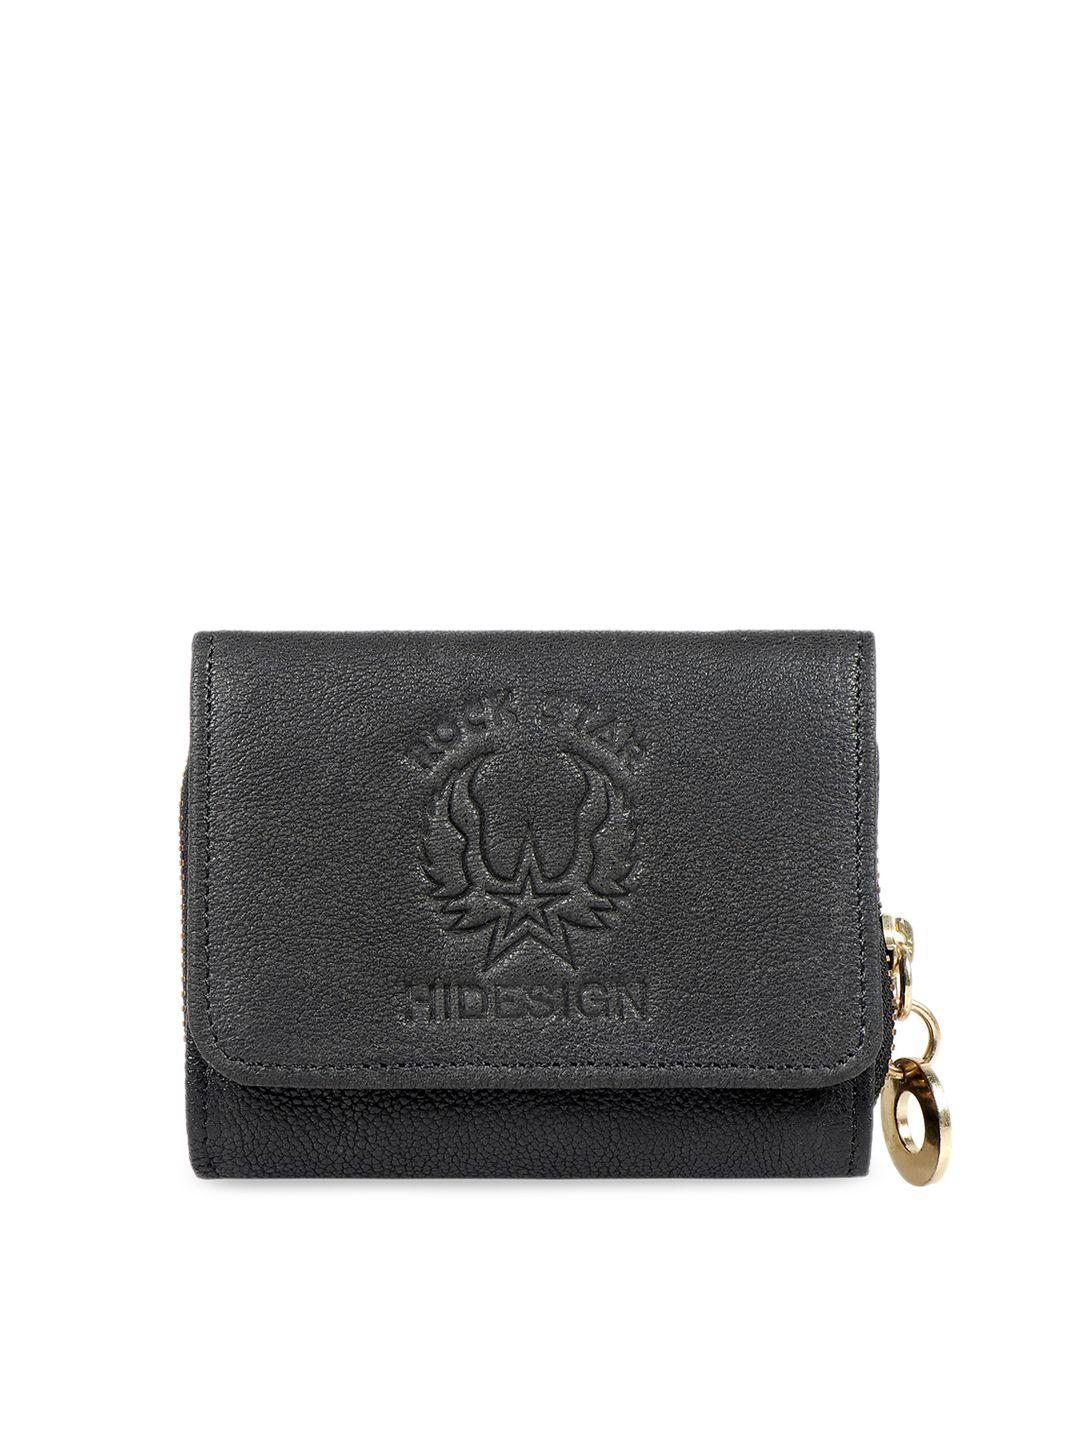 hidesign women black textured leather three fold wallet